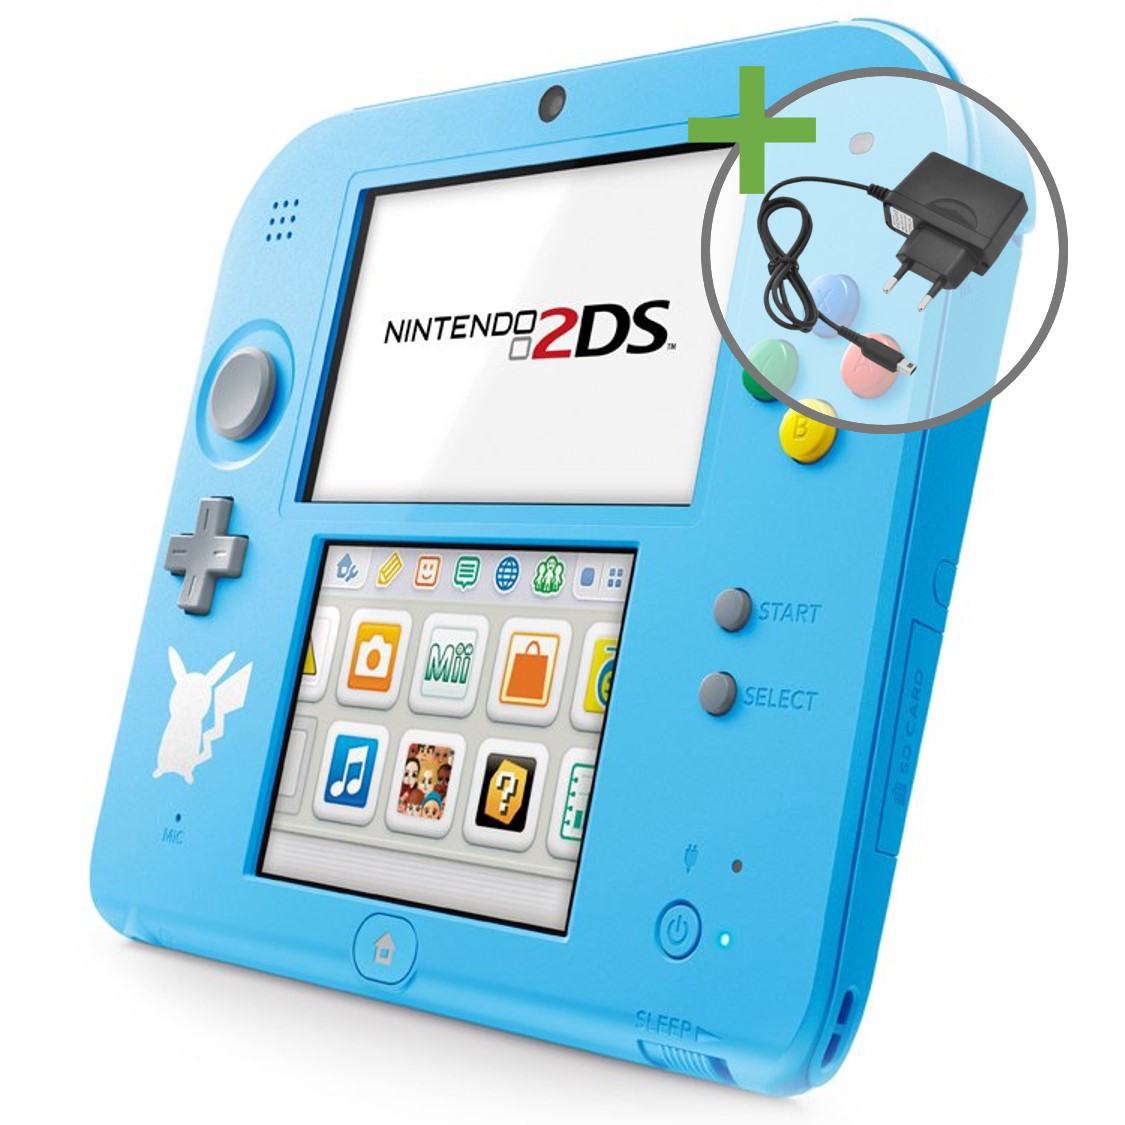 Nintendo 2DS - Pokémon Sun Moon Edition - Light Blue - Nintendo 3DS Hardware